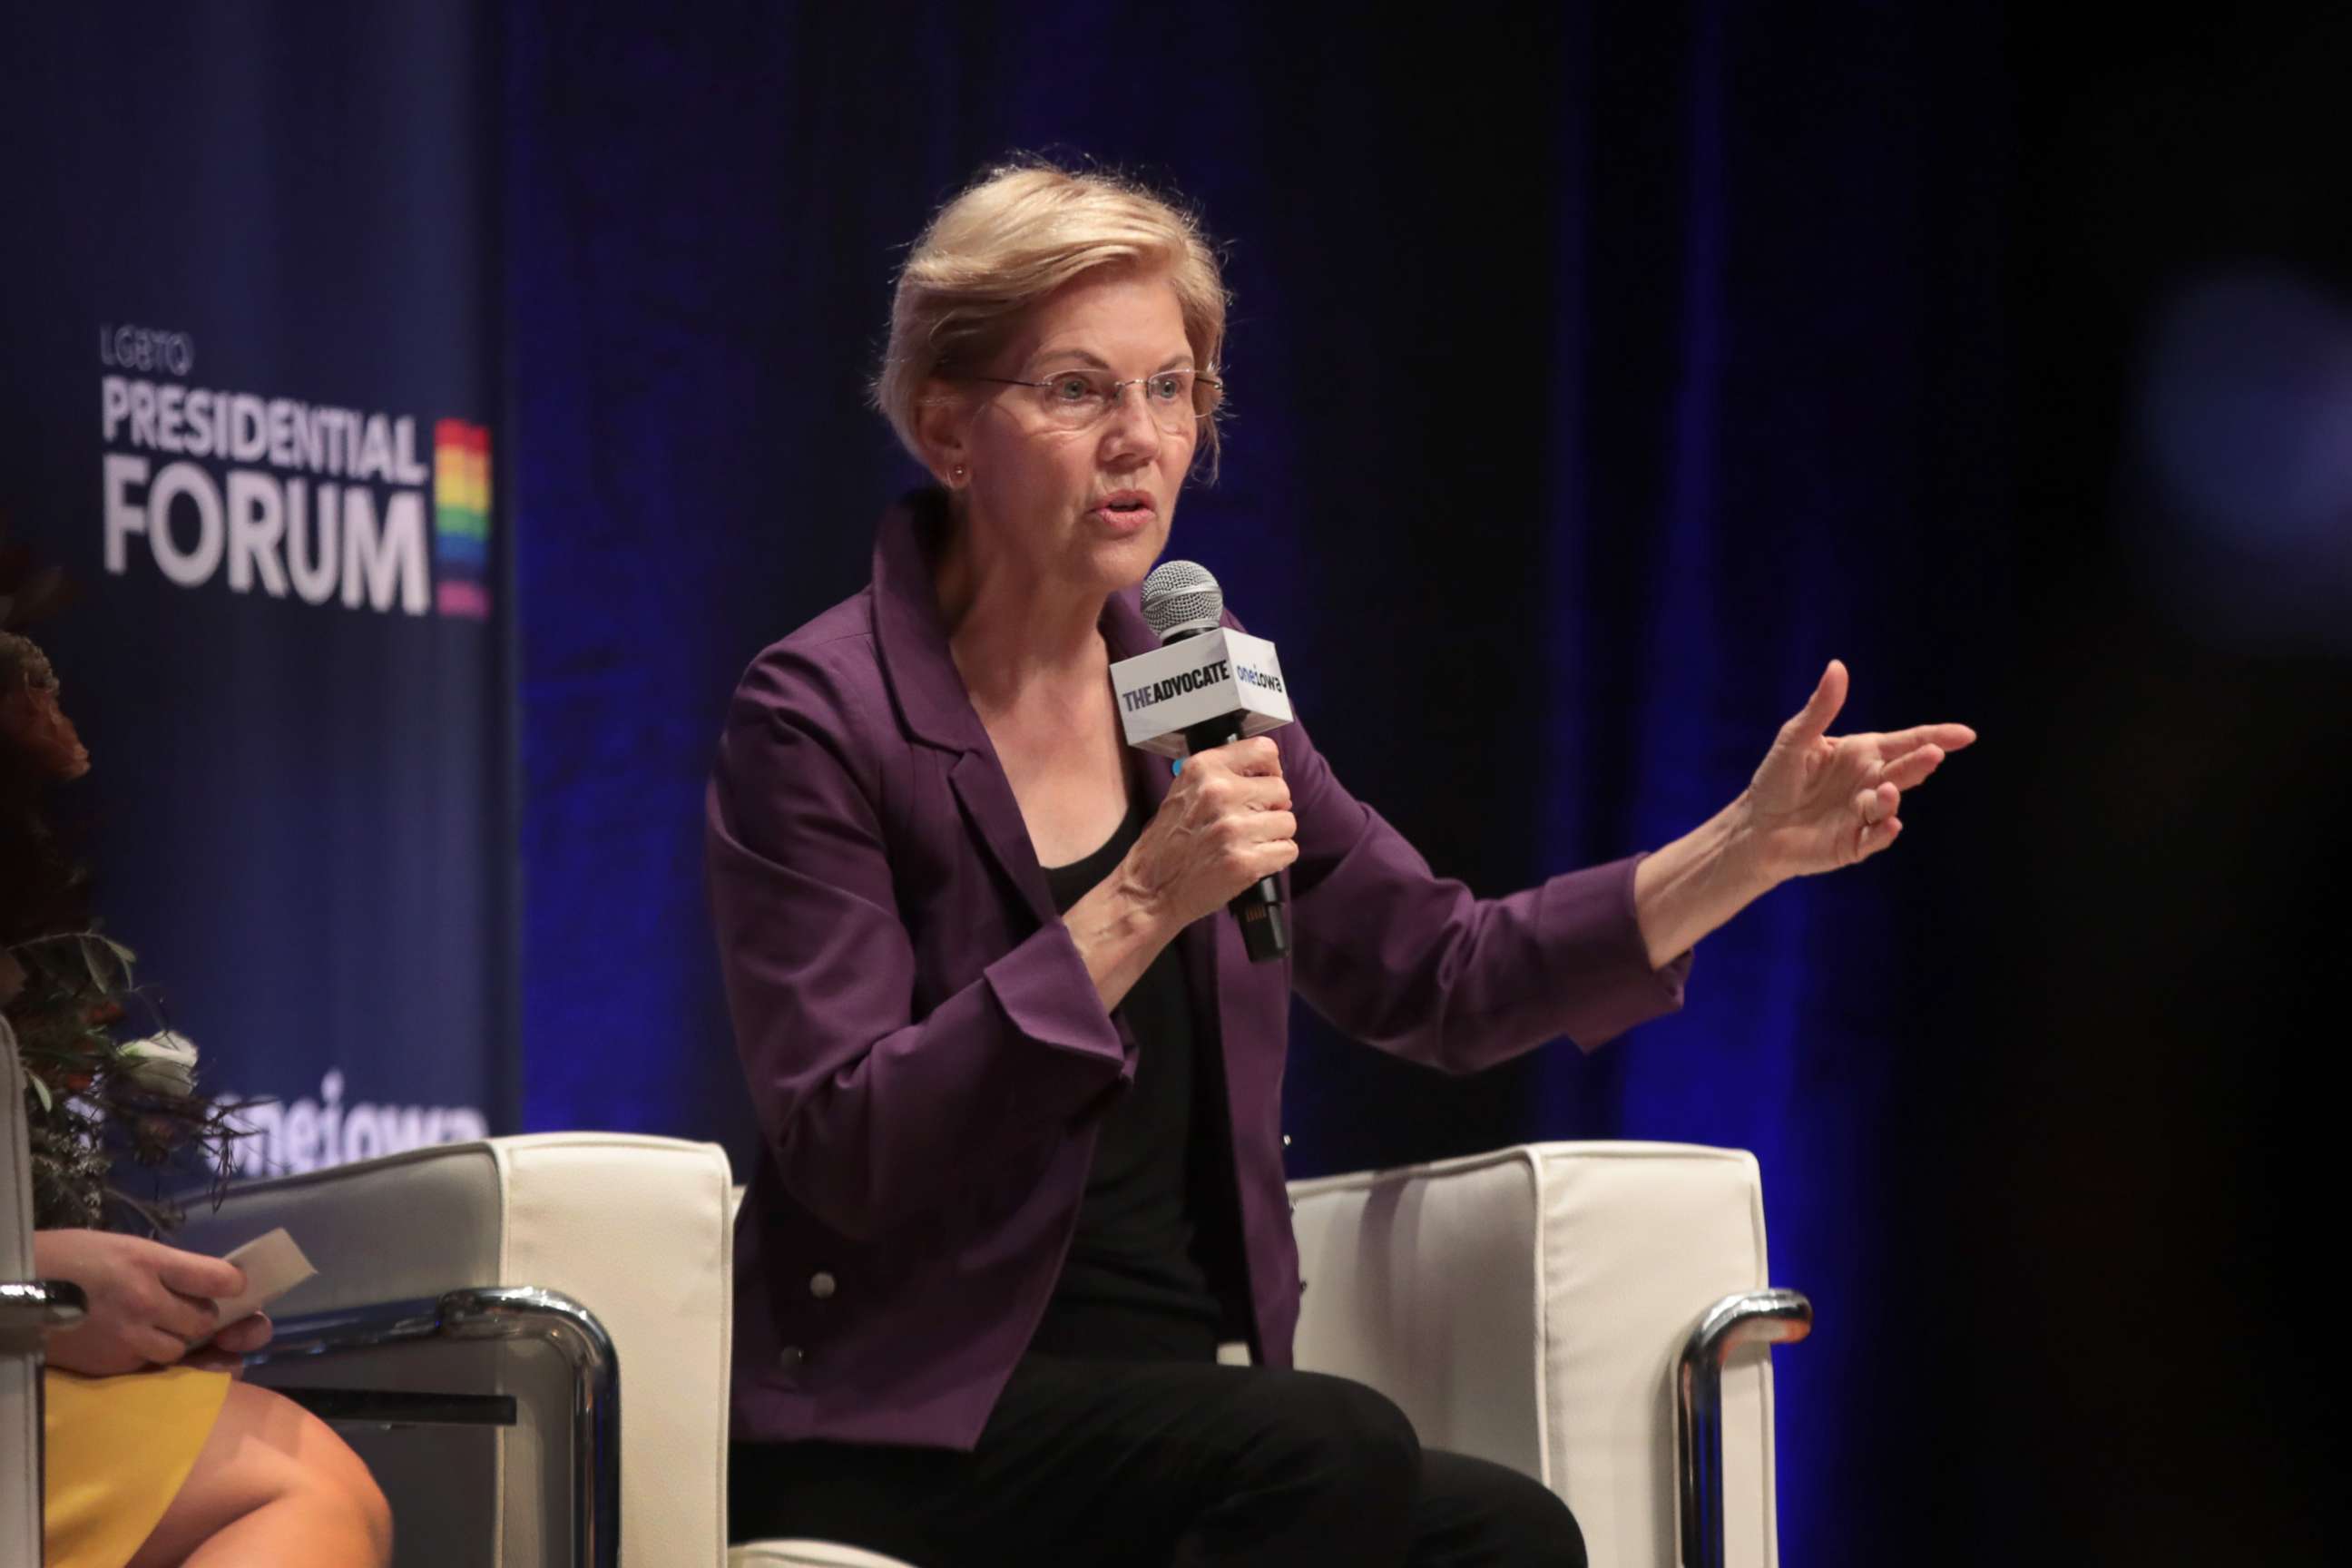 PHOTO: Democratic presidential candidate Massachusetts Senator Elizabeth Warren speaks at an LGBTQ presidential forum on September 20, 2019 in Cedar Rapids, Iowa.